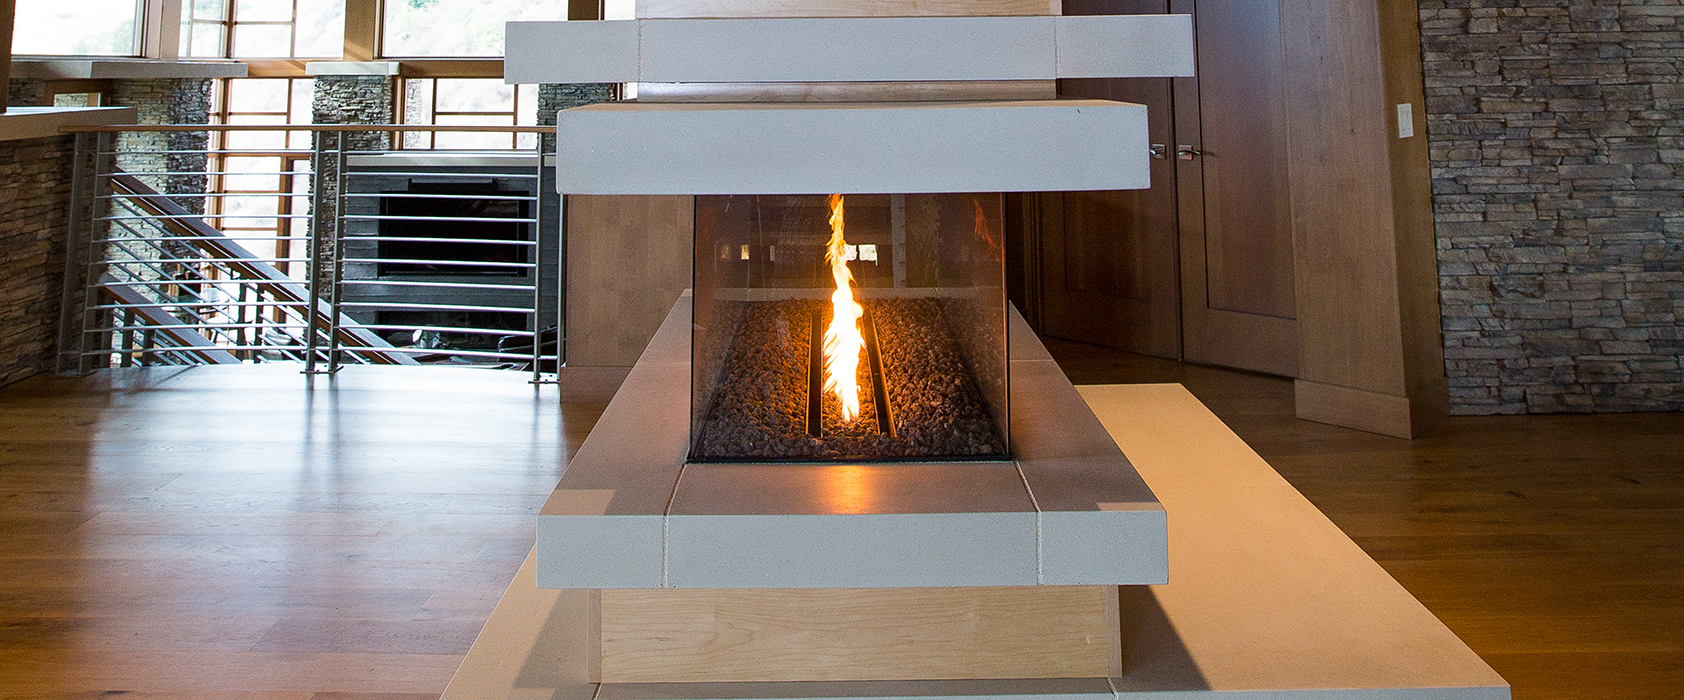 beautiful custom gas fireplace